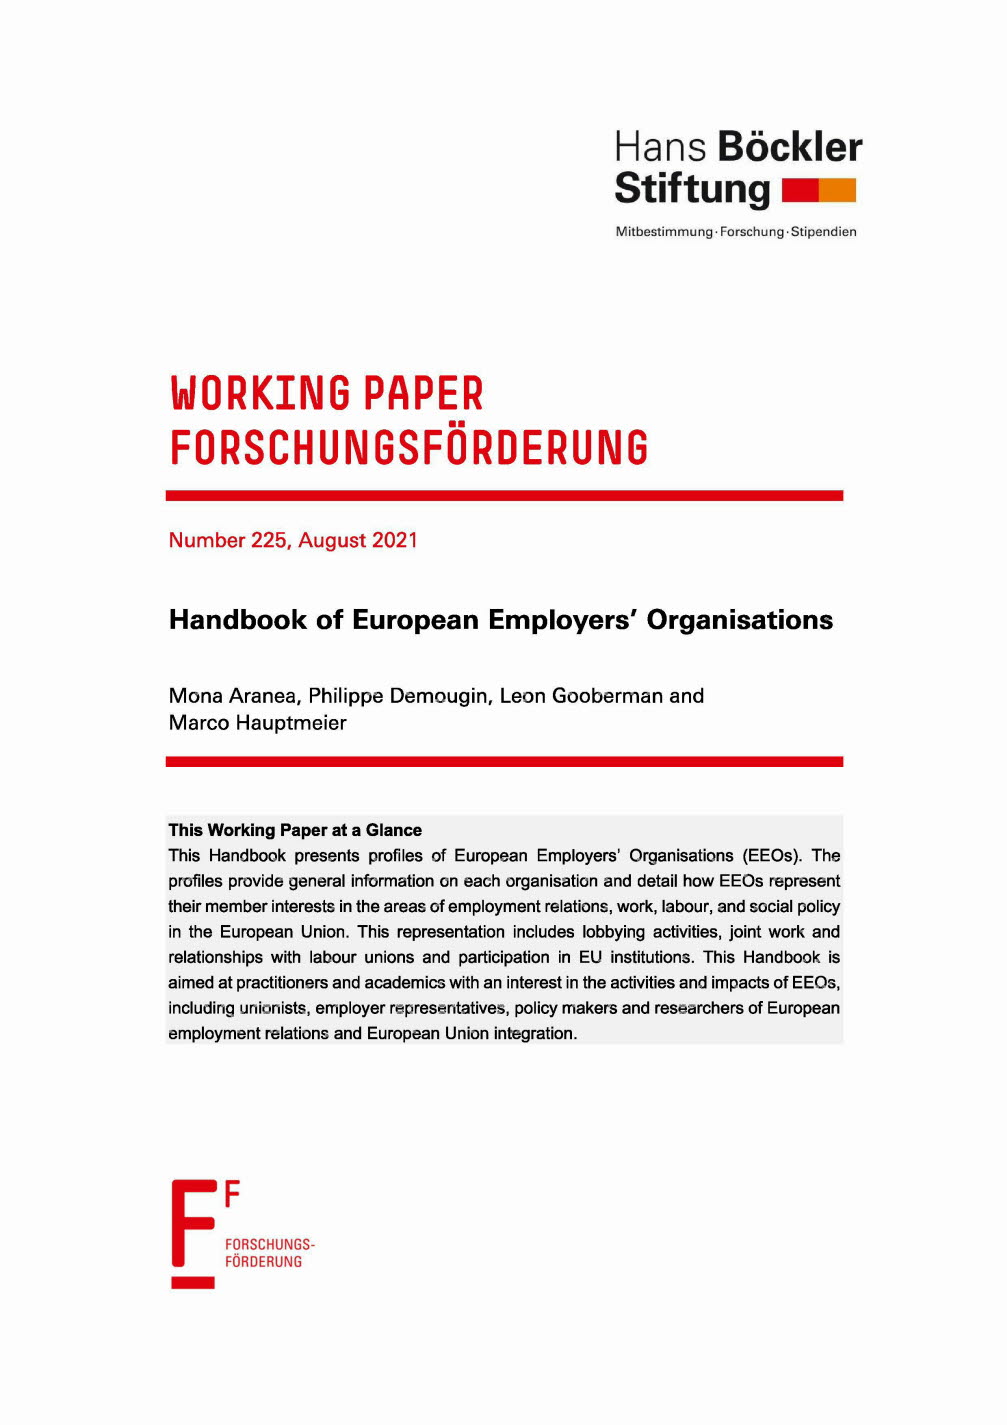 Handbook of European Employers` Organisations